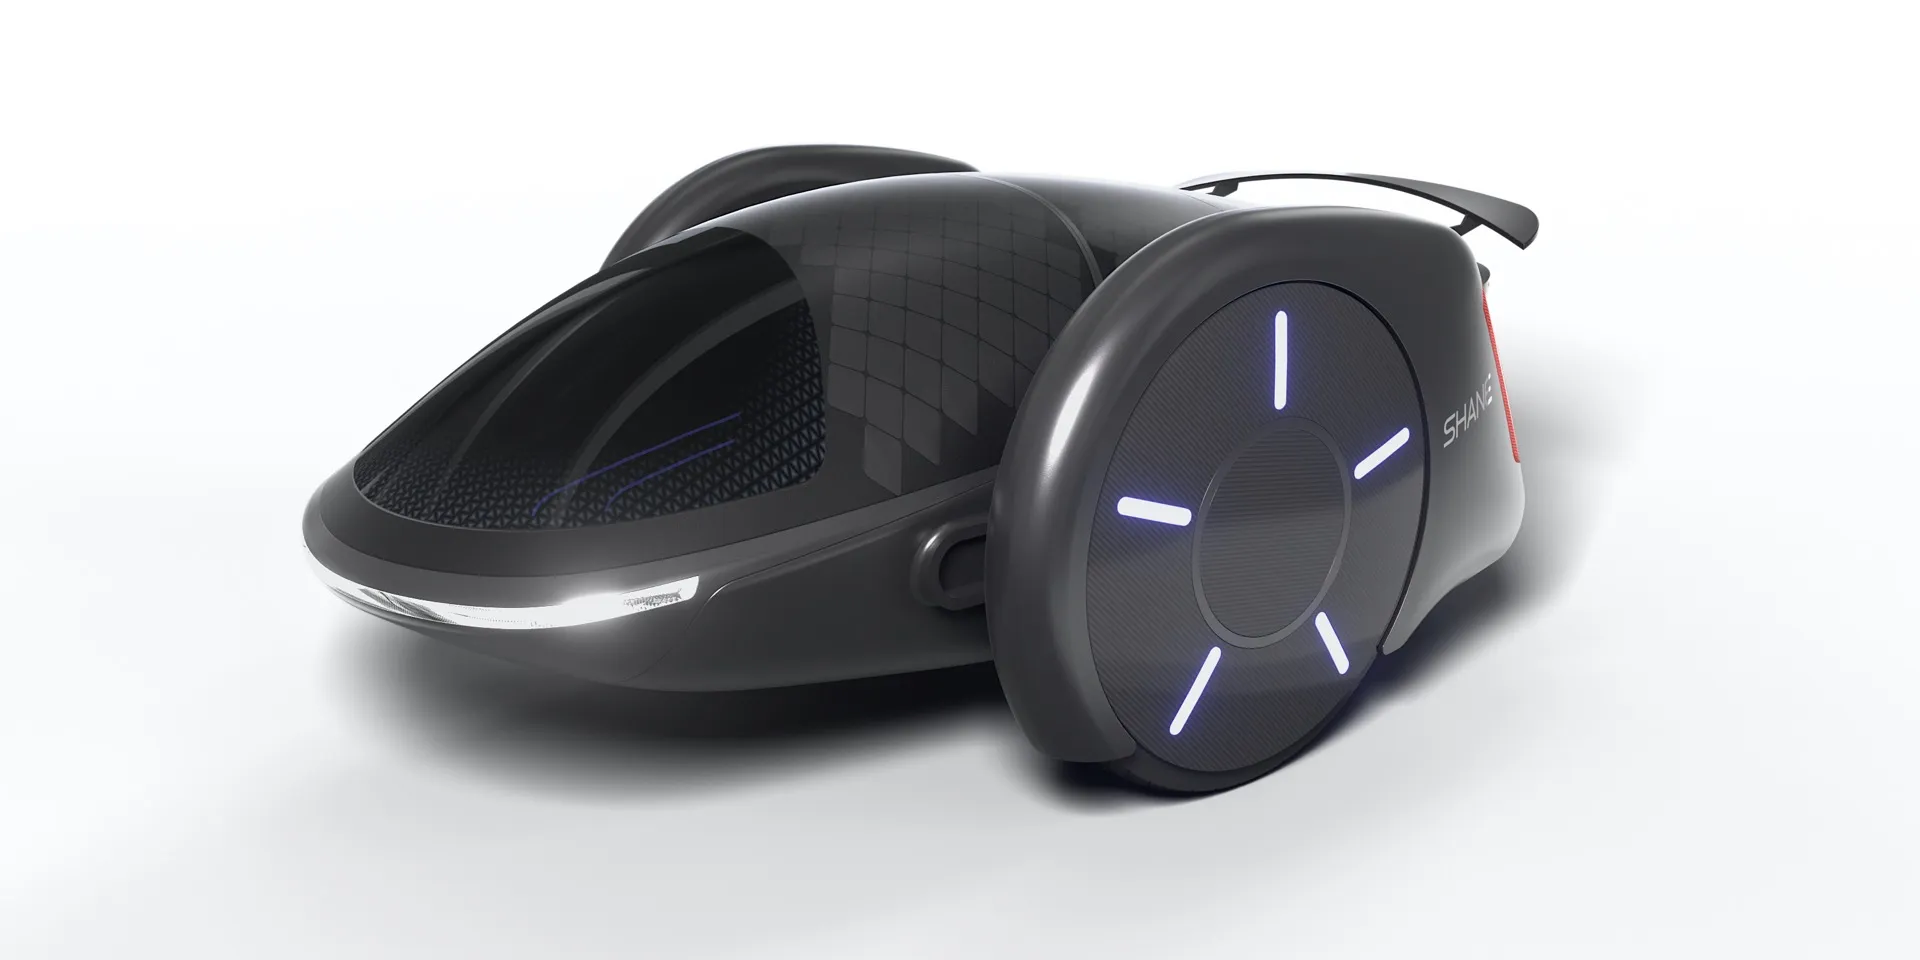 Two-wheel EV idea seats 5, harnesses regenerative damping